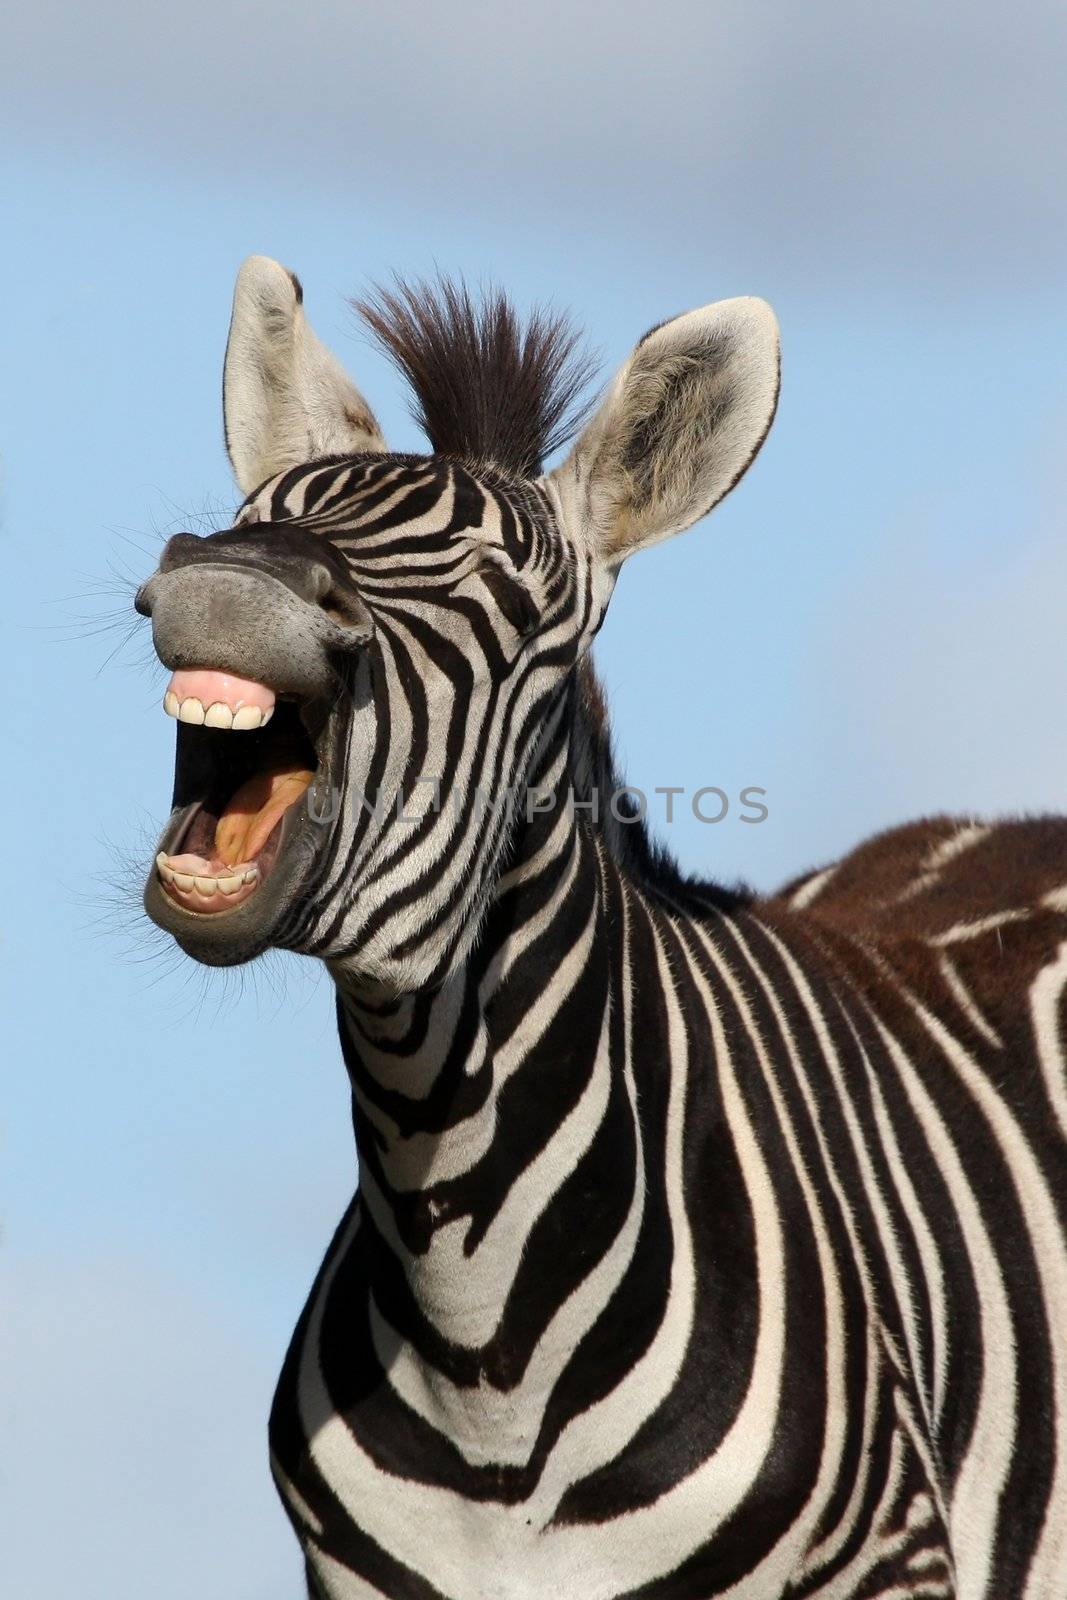 Laughing Zebra by fouroaks